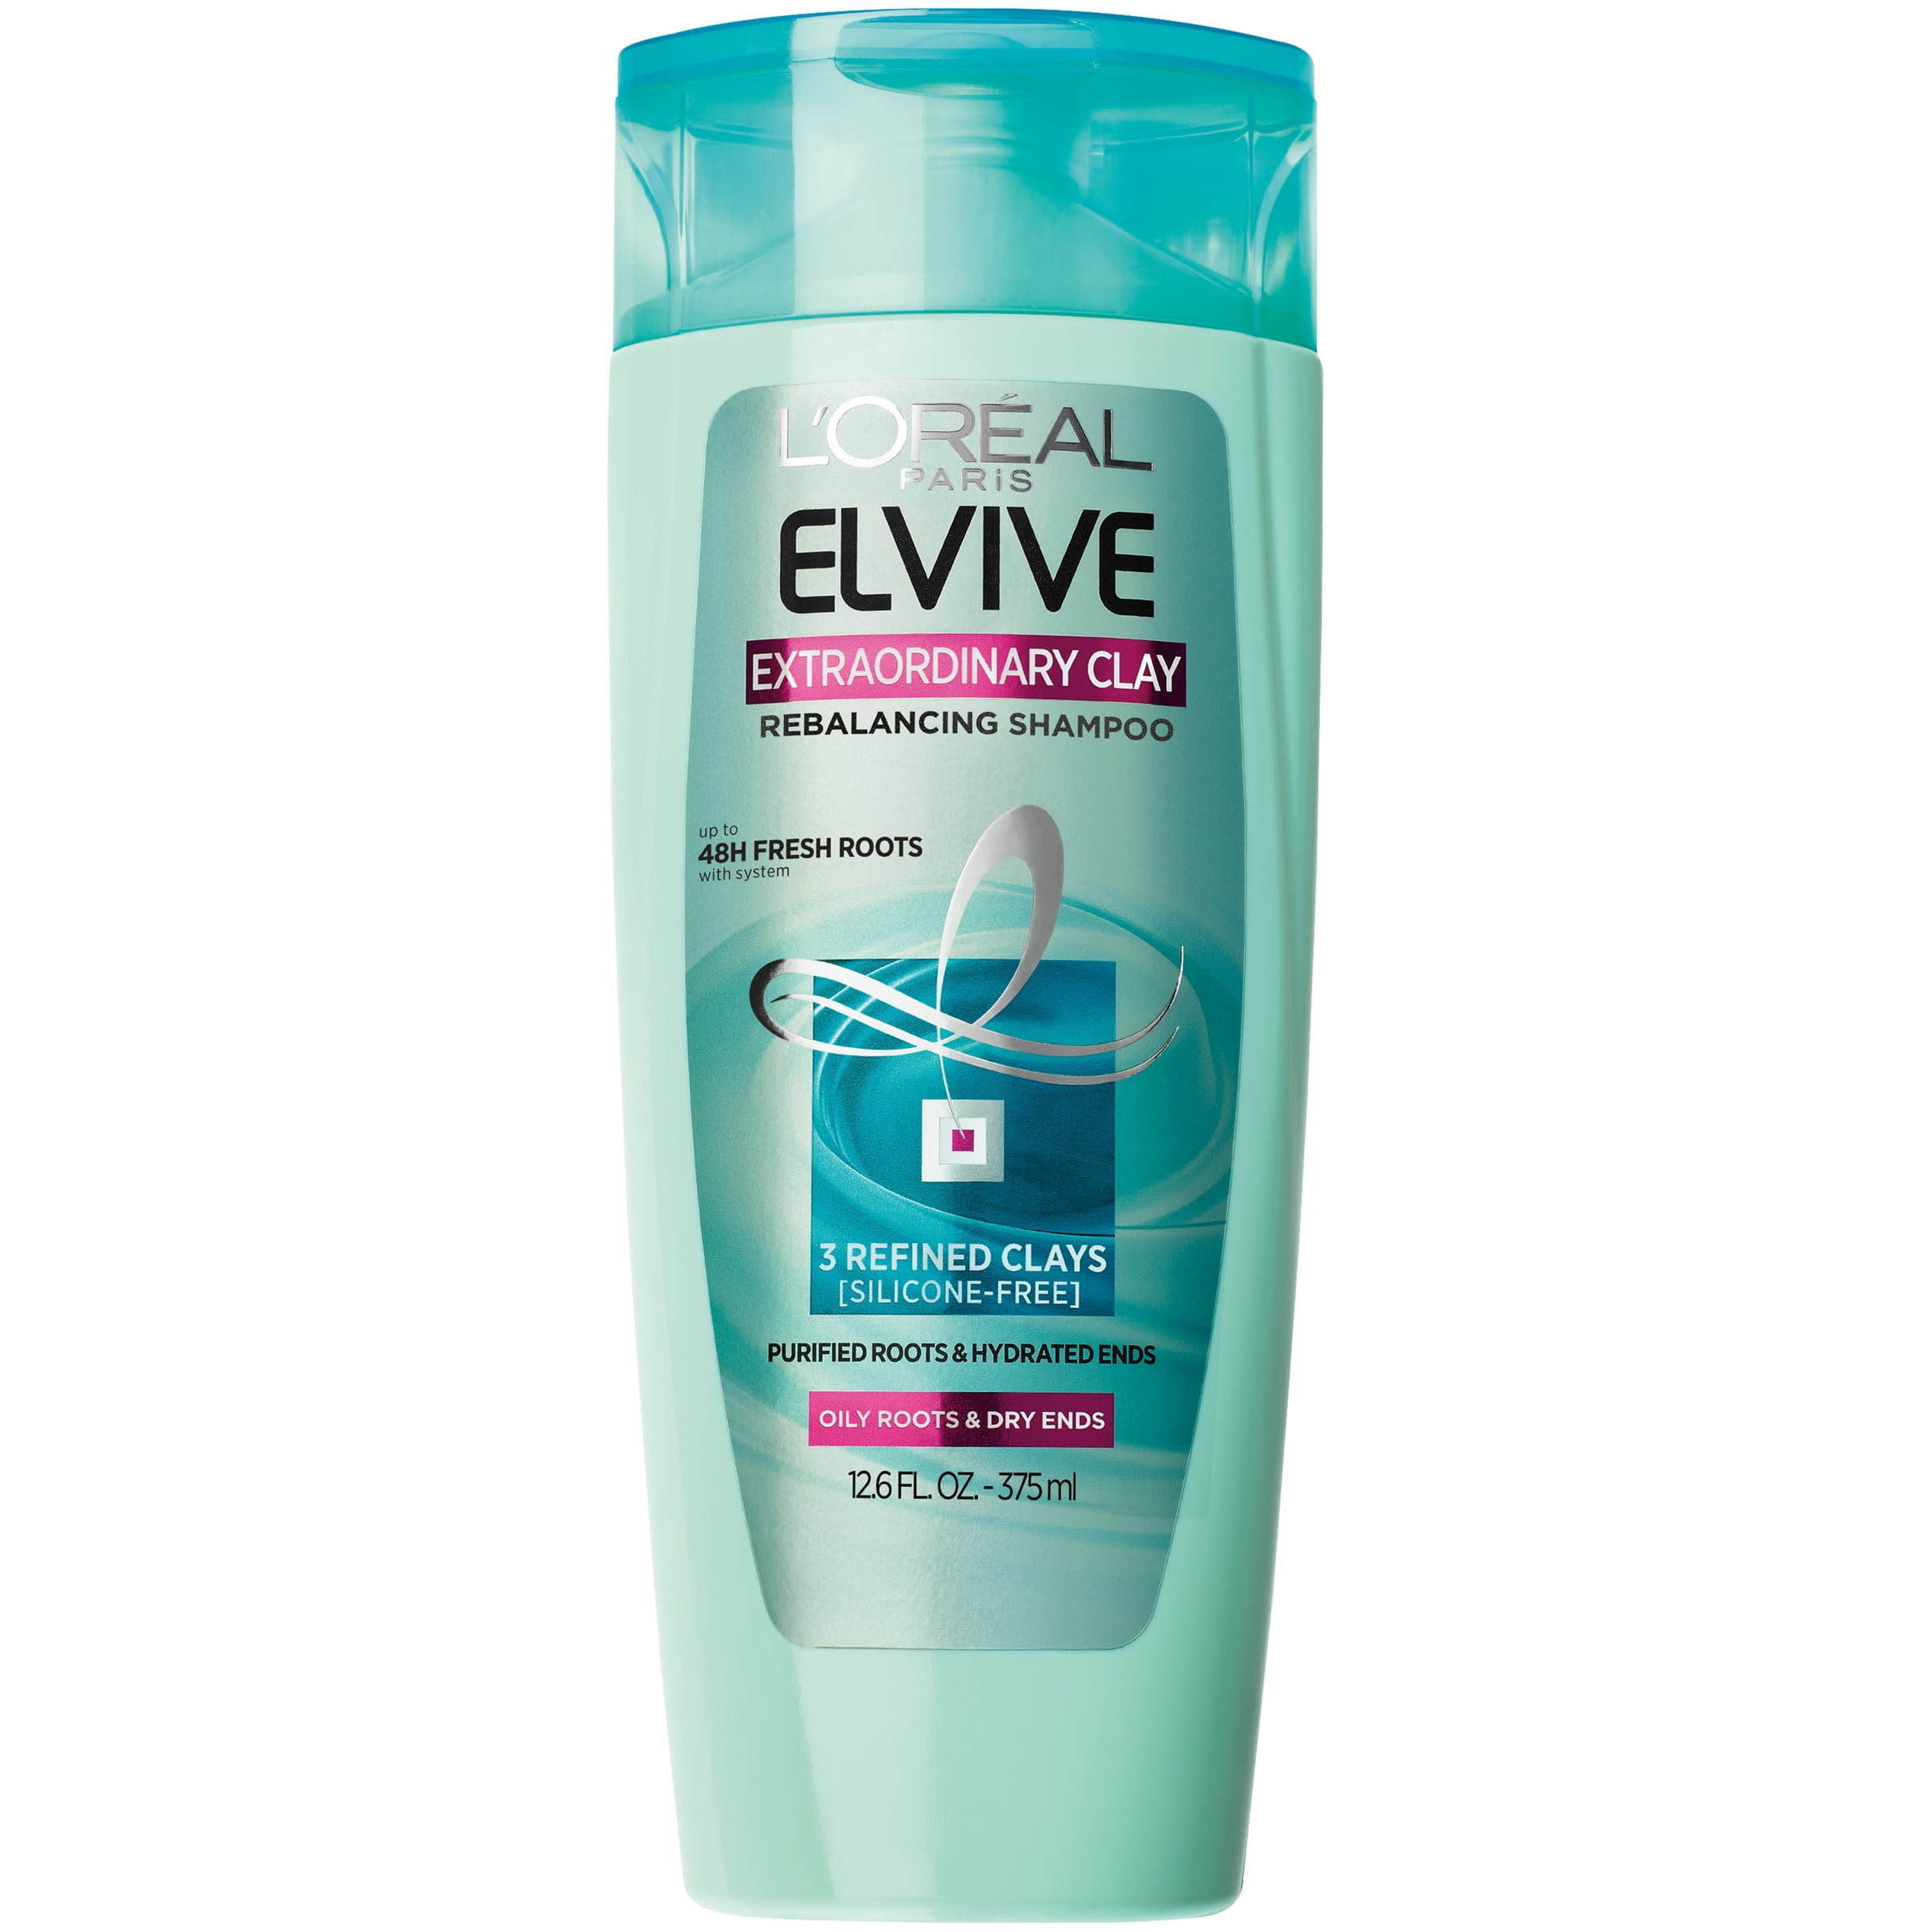 L'Oreal Paris Elvive Extraordinary Rebalancing Shampoo, 12.6 fl oz Walmart.com